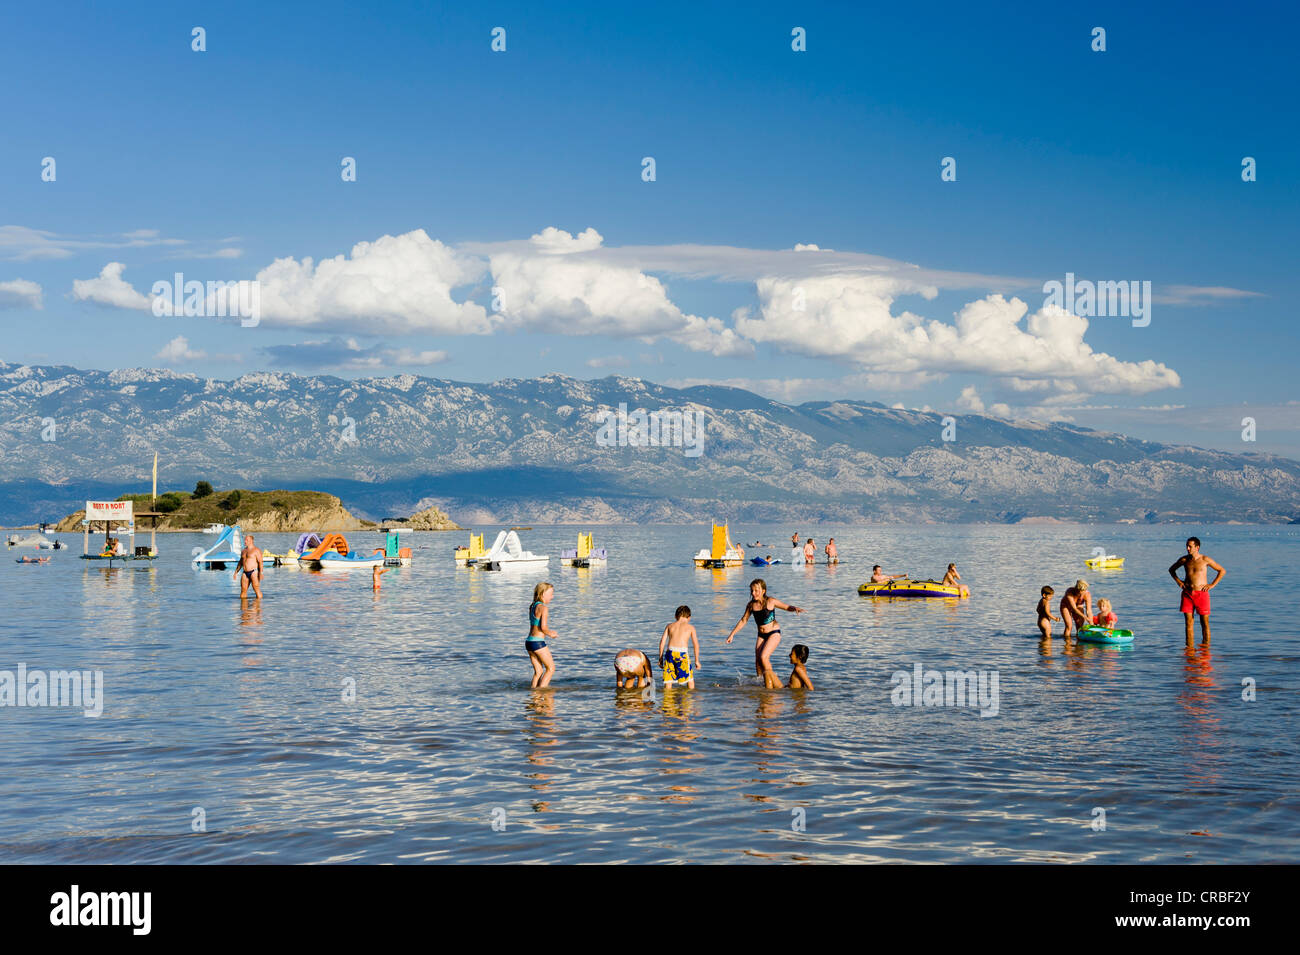 Les vacanciers hors baignade Paradise beach, San Marin, l'île de Rab, golfe de Kvarner, Croatie, Europe Banque D'Images